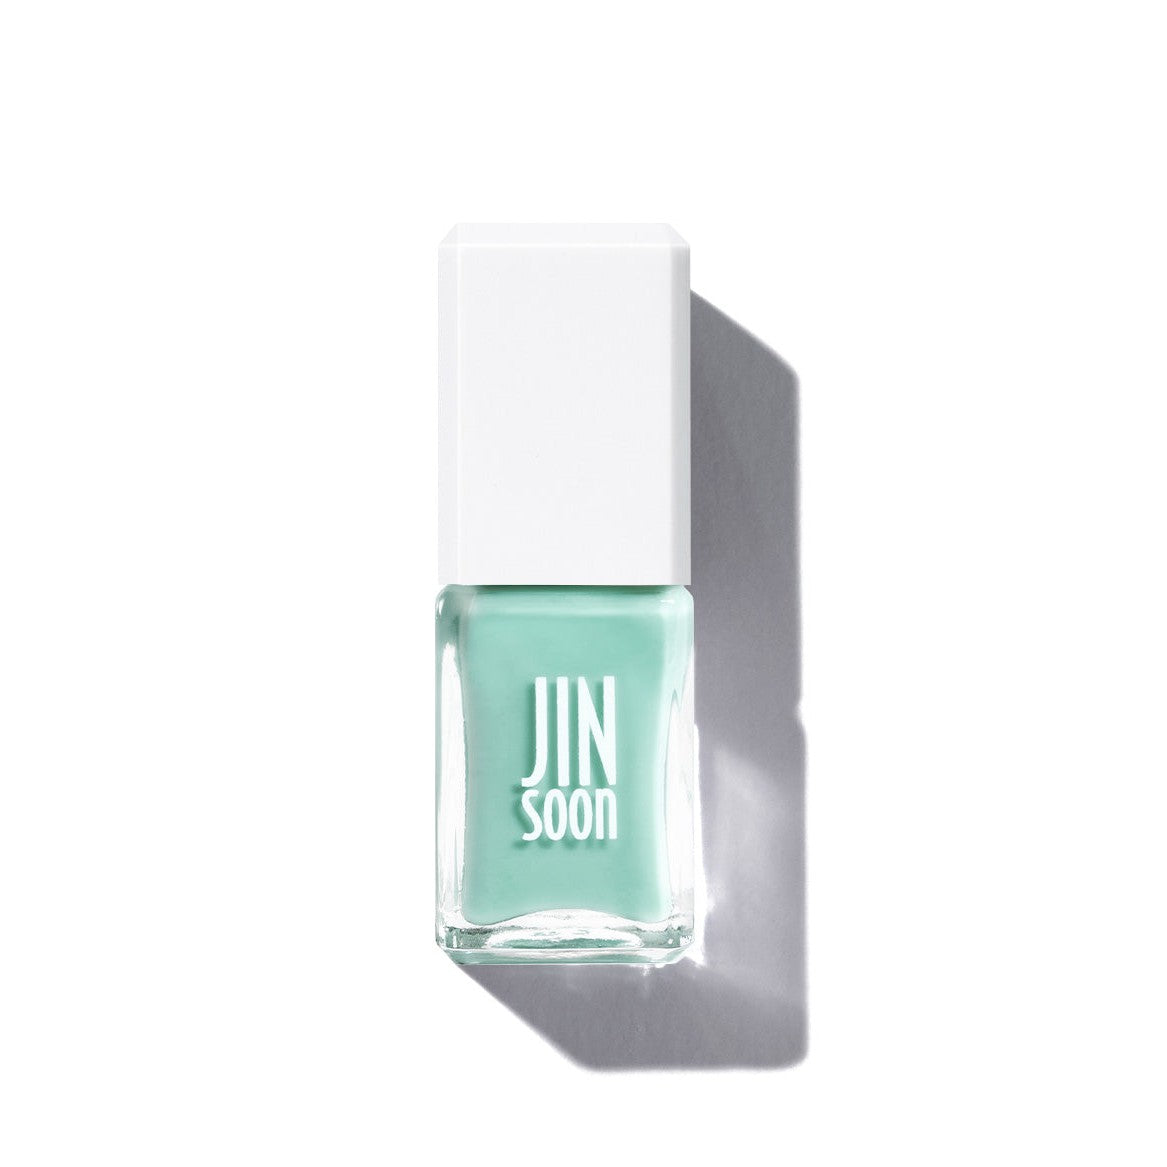 JINsoon - Nail Polish - Charm 0.37 oz